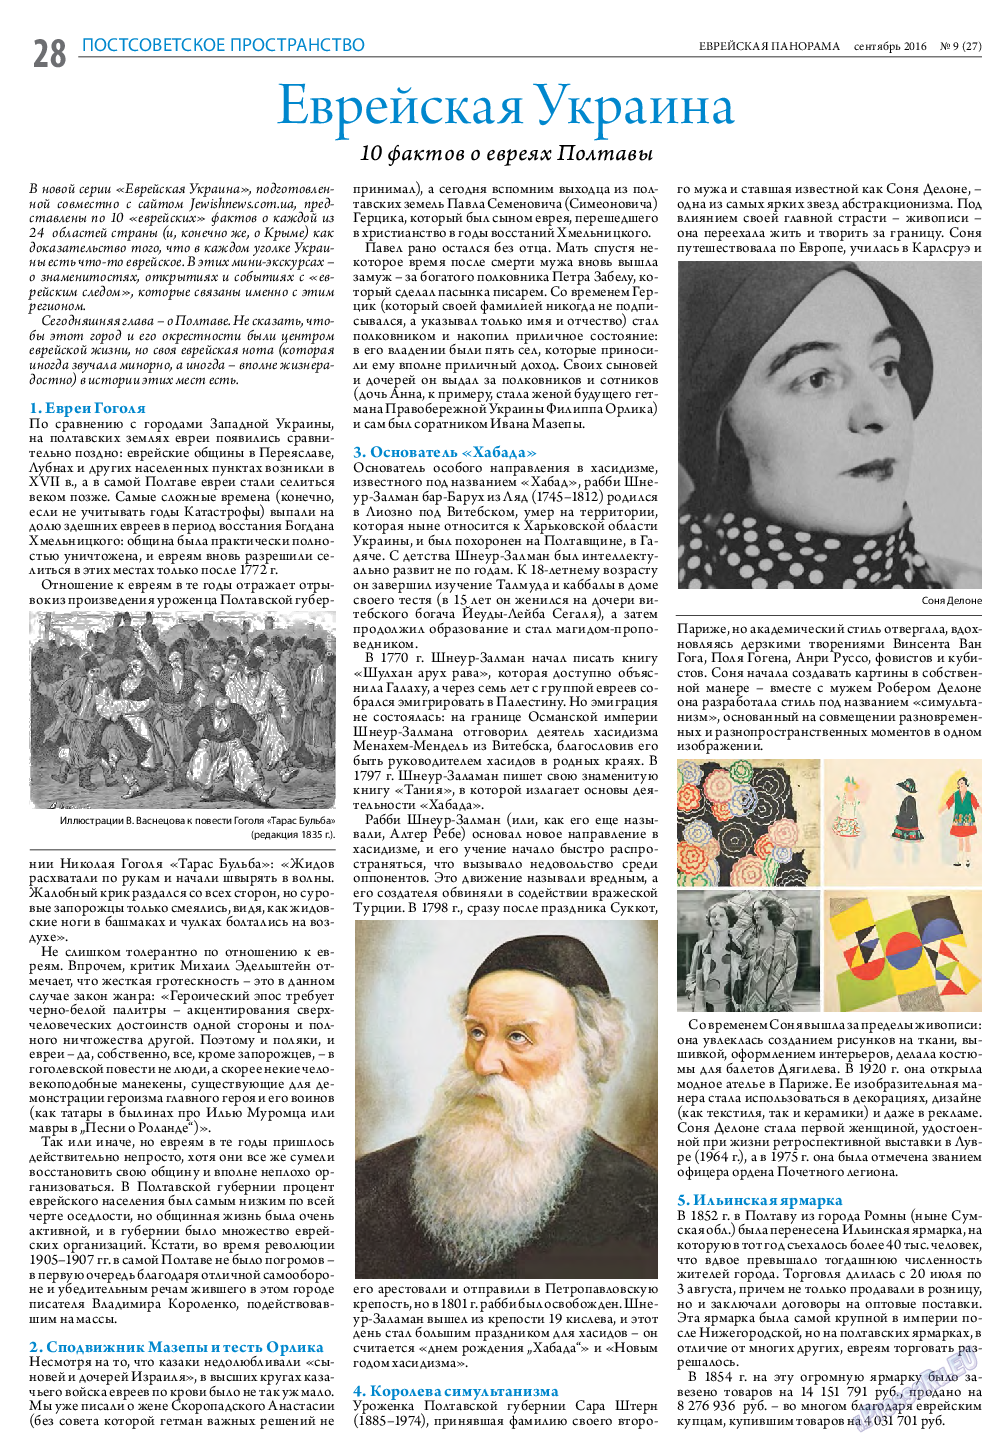 Еврейская панорама, газета. 2016 №9 стр.28